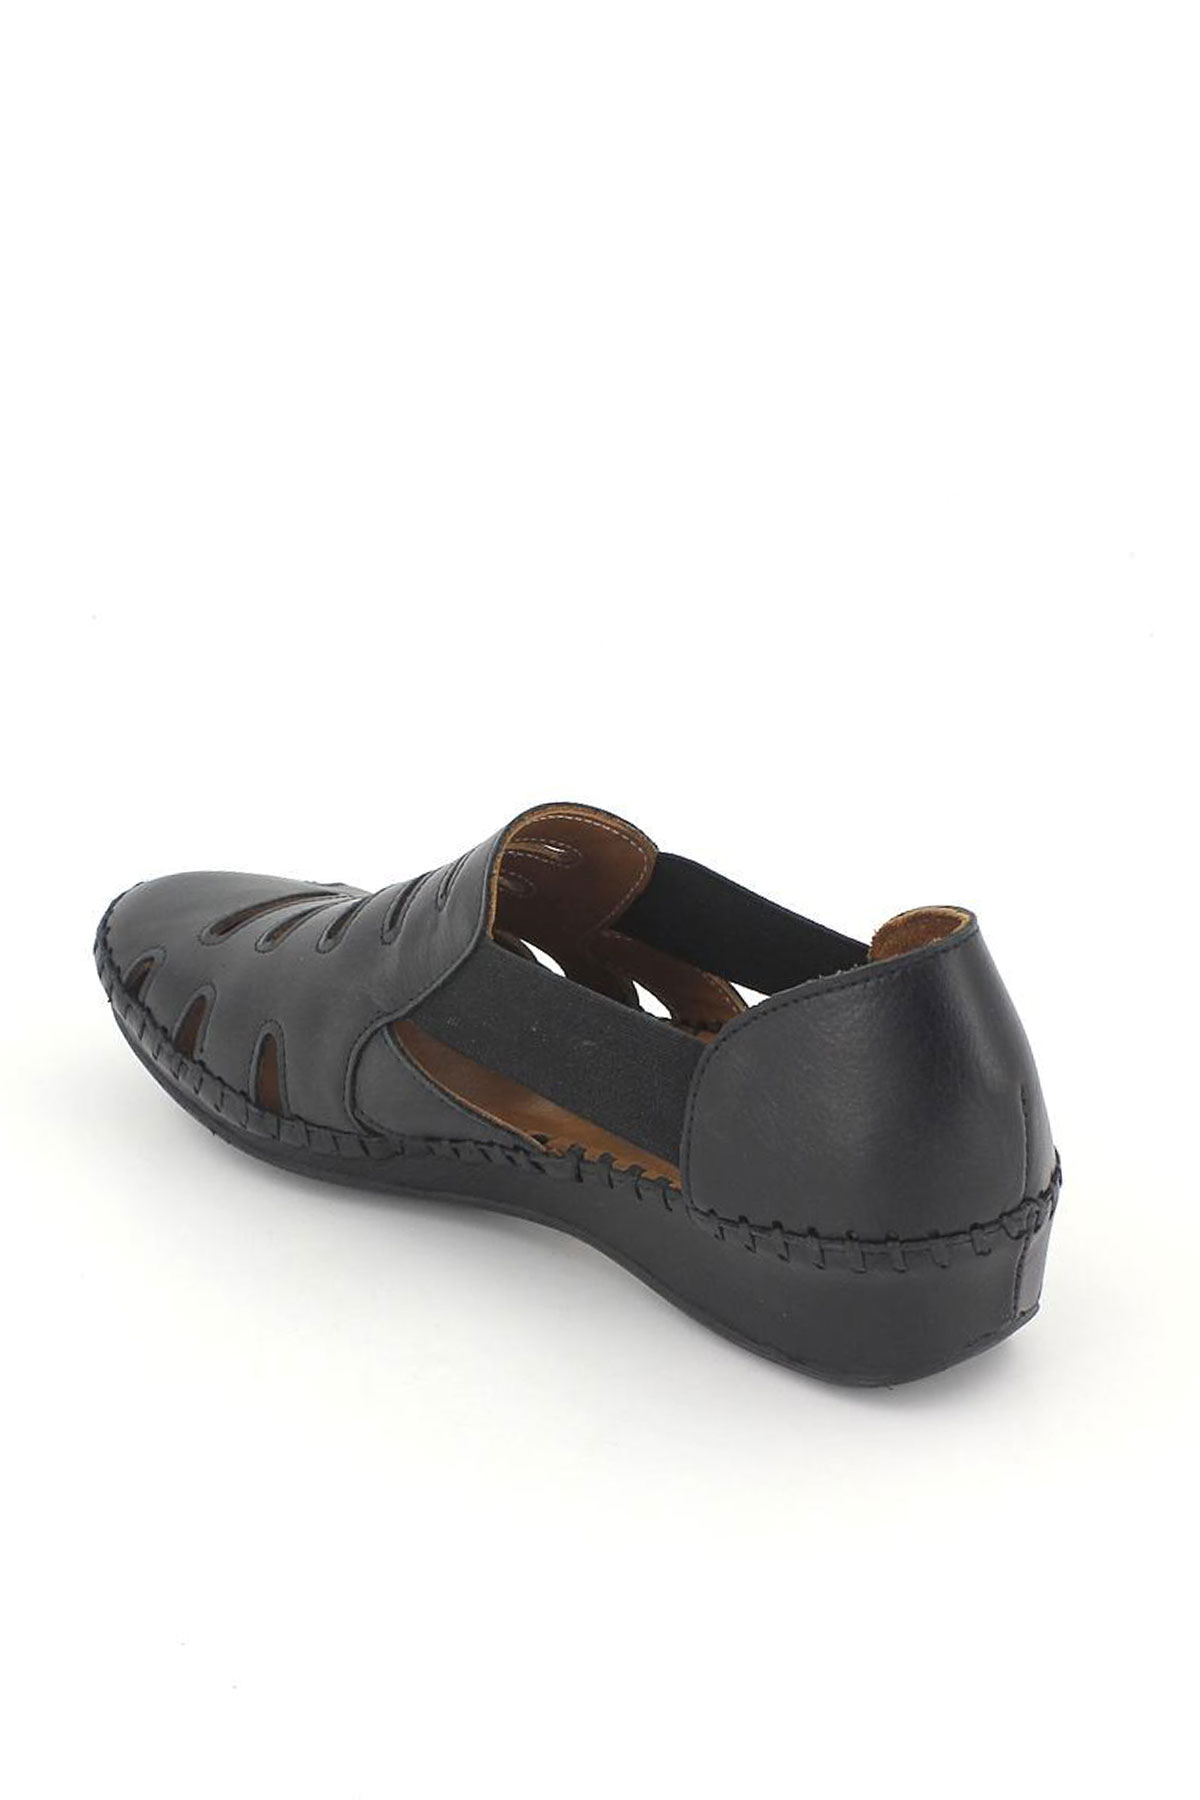 Kadın Comfort Deri Sandalet Siyah 18791395 - Thumbnail